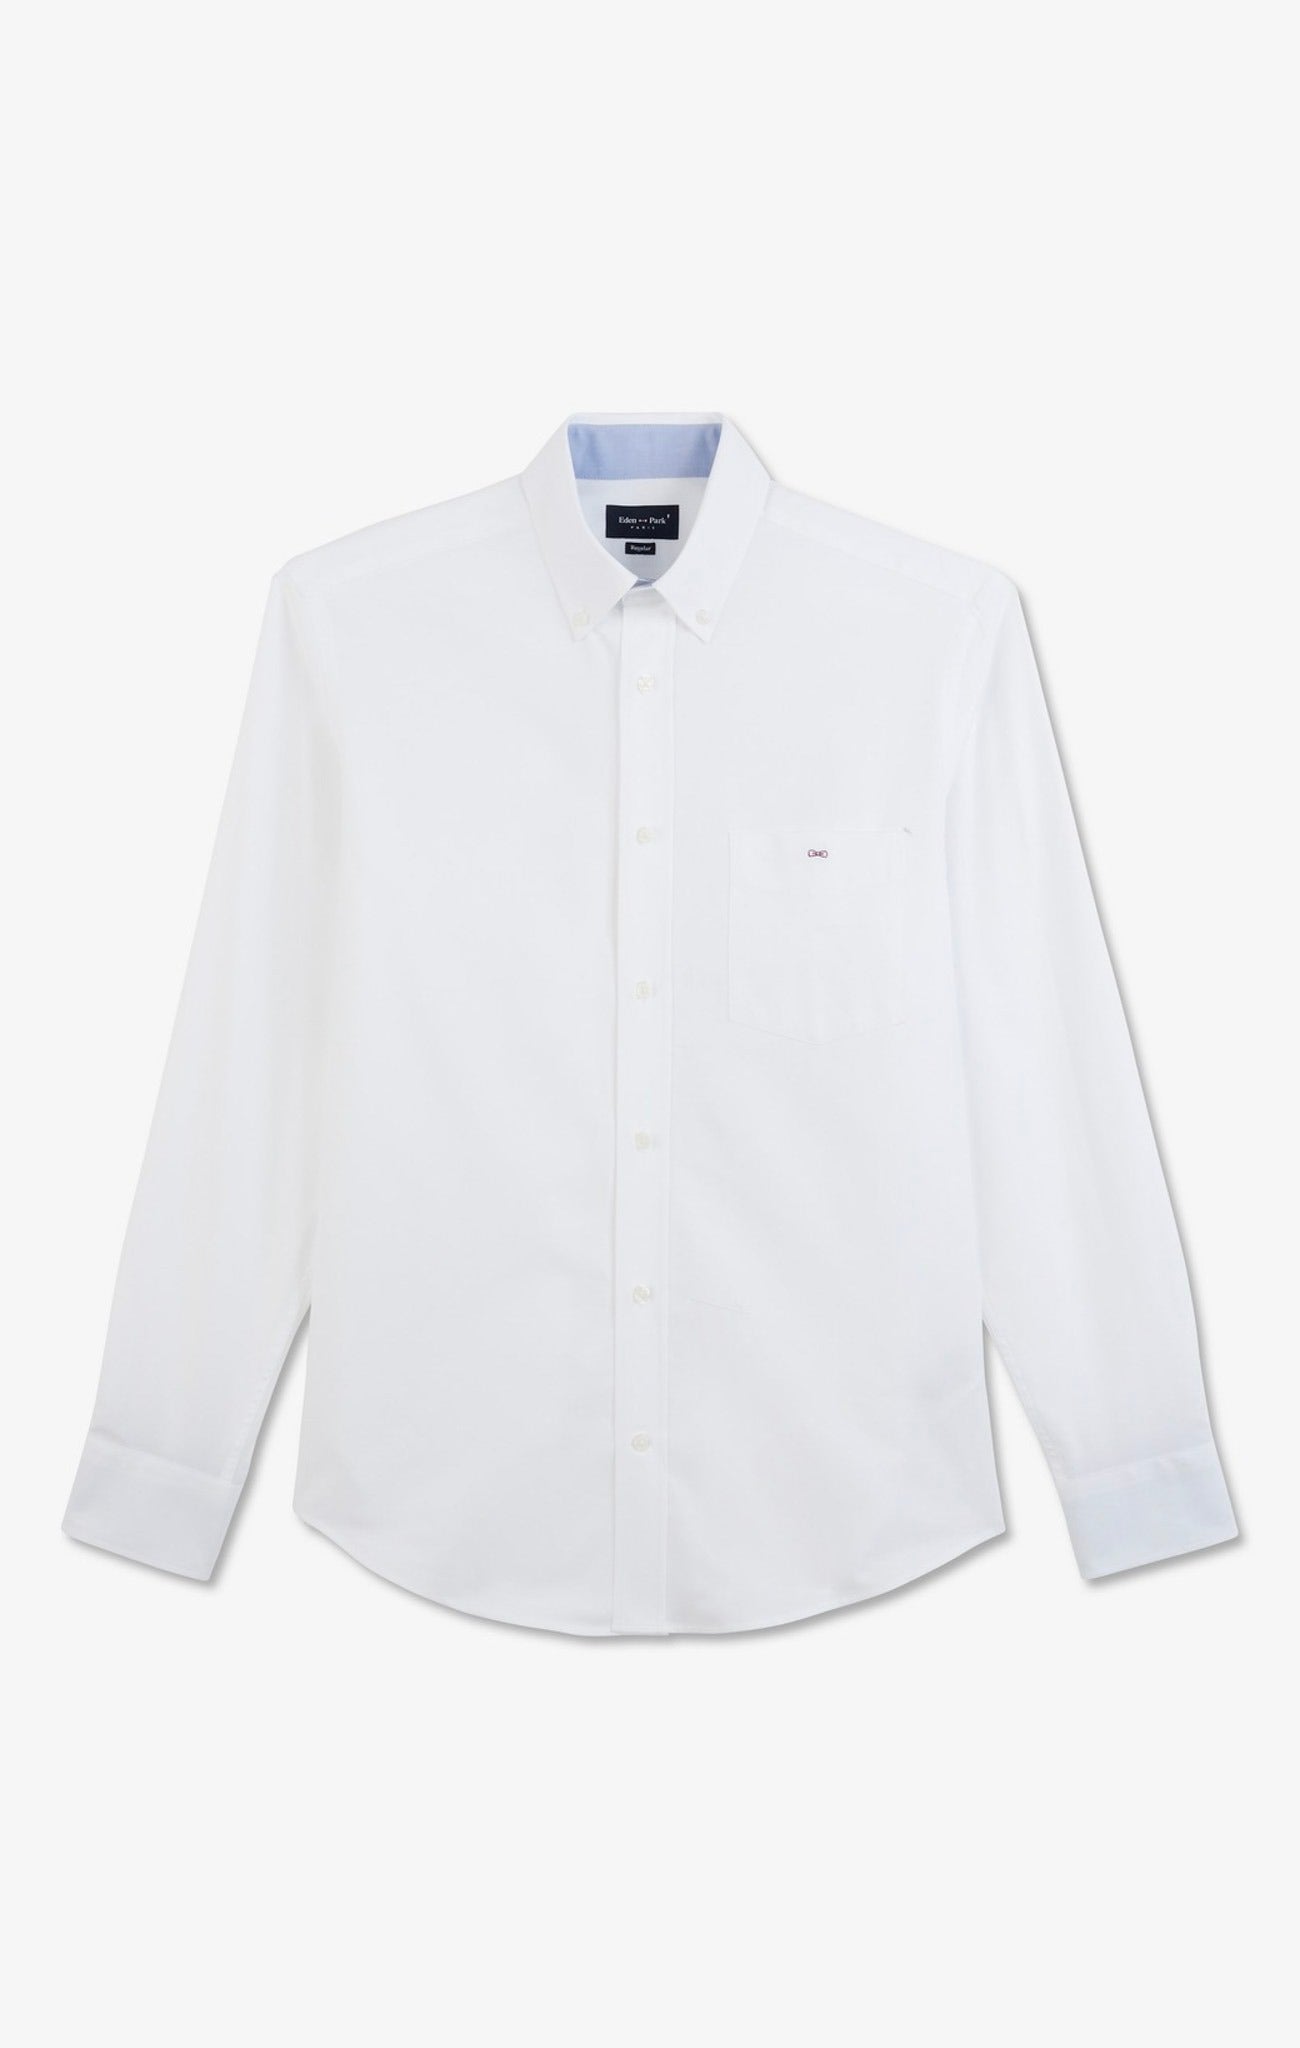 White cotton shirt - Image 2